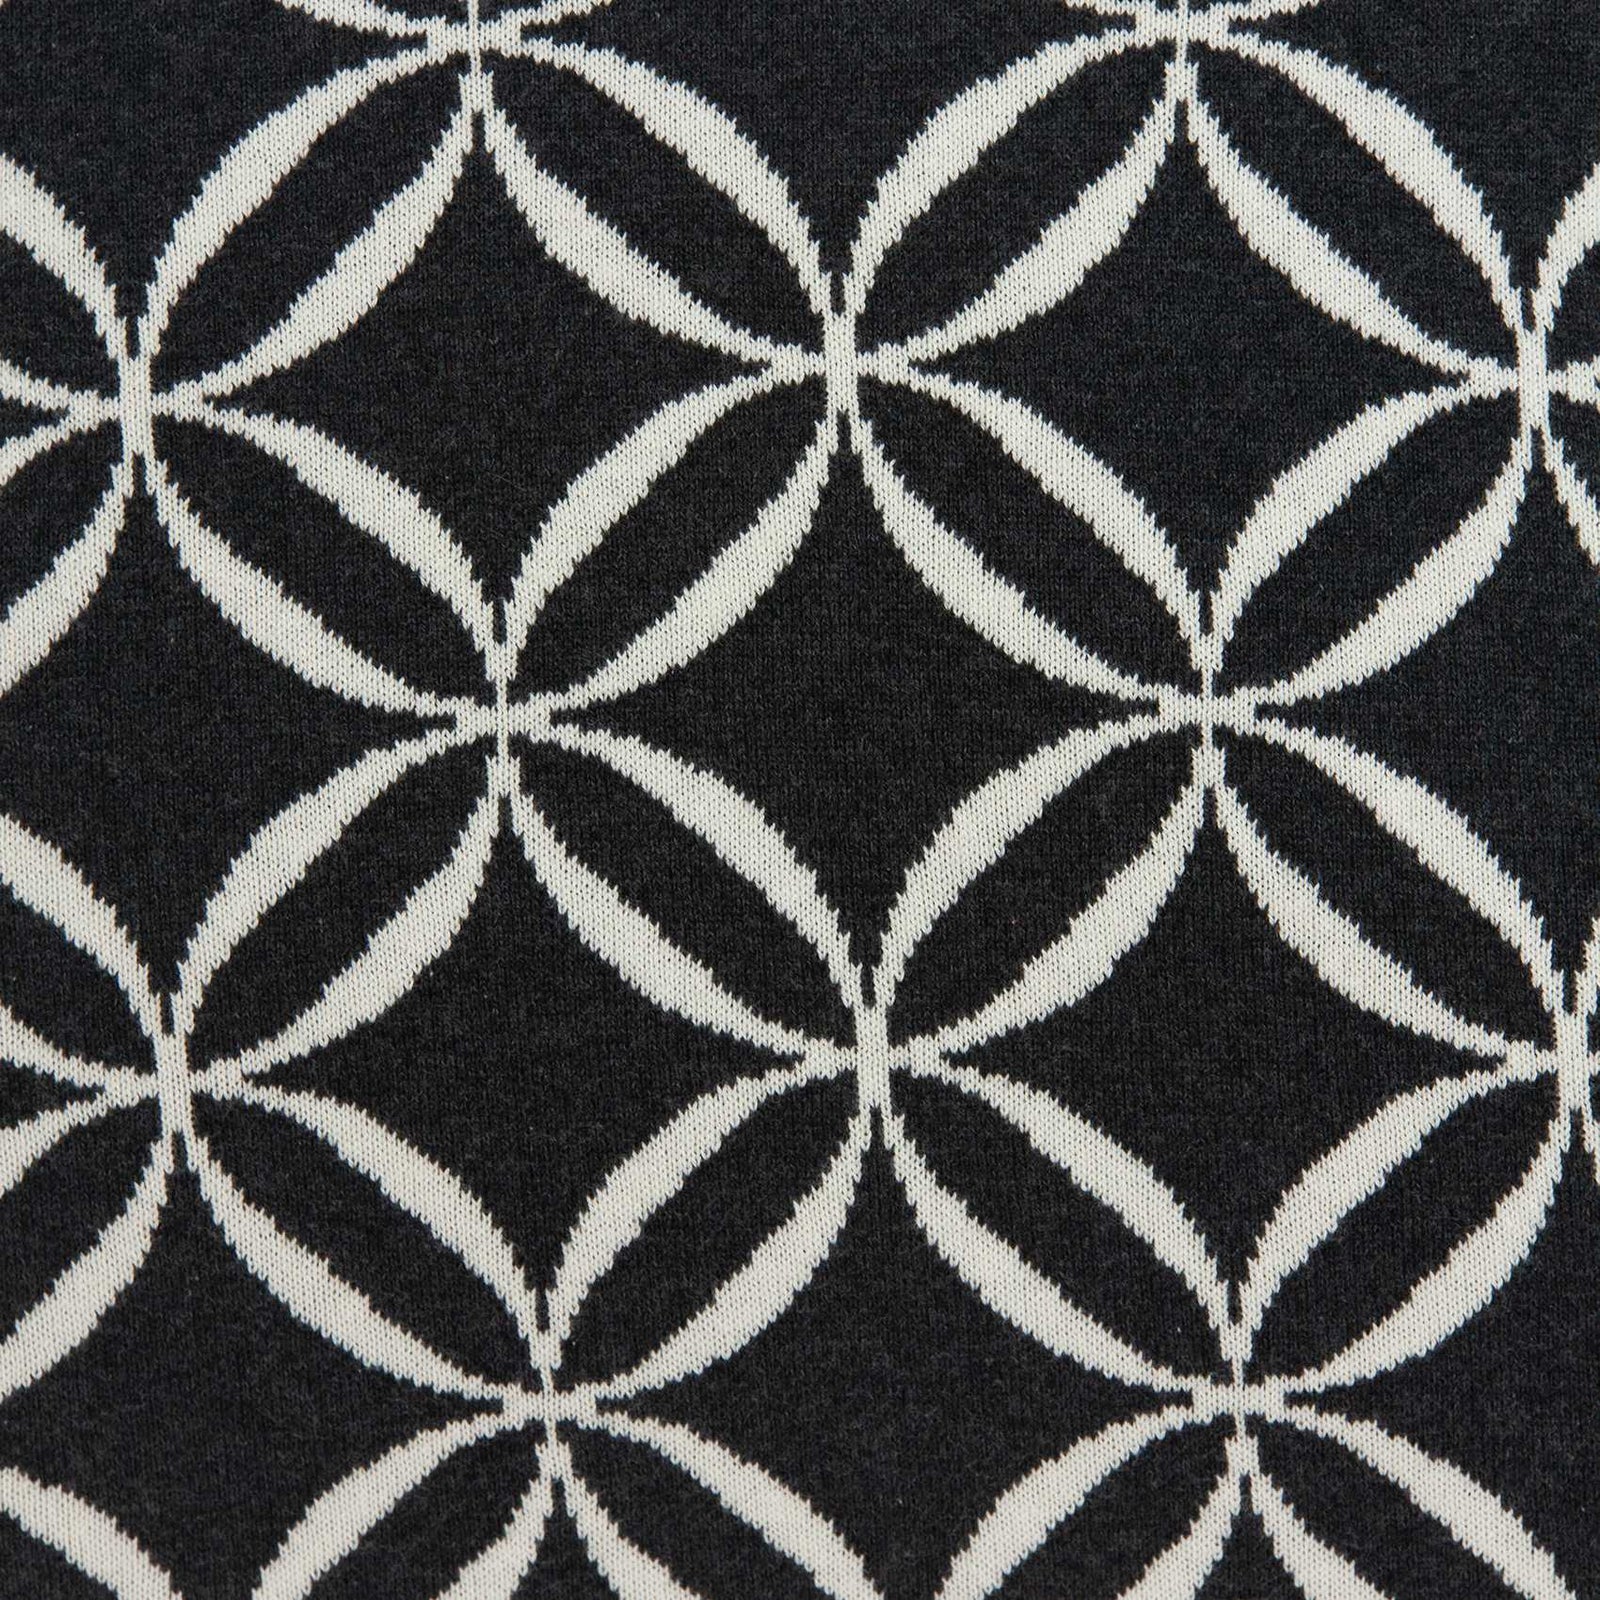 Geometric Design Black And White Cotton Pillow Cover